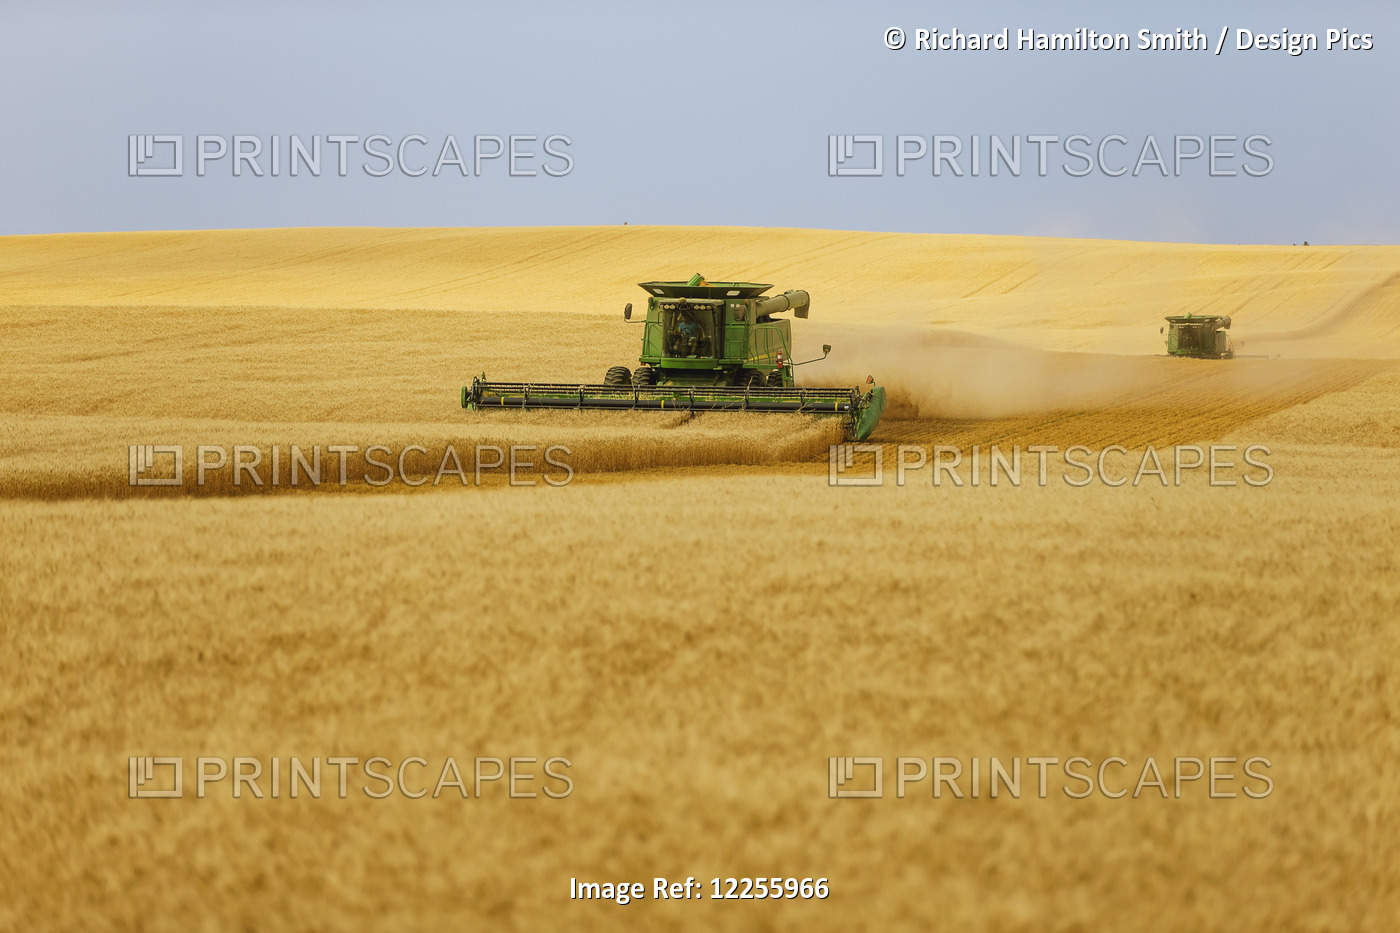 Paplow Harvesting Company Custom Combines A Wheat Field, Near Ray; North ...